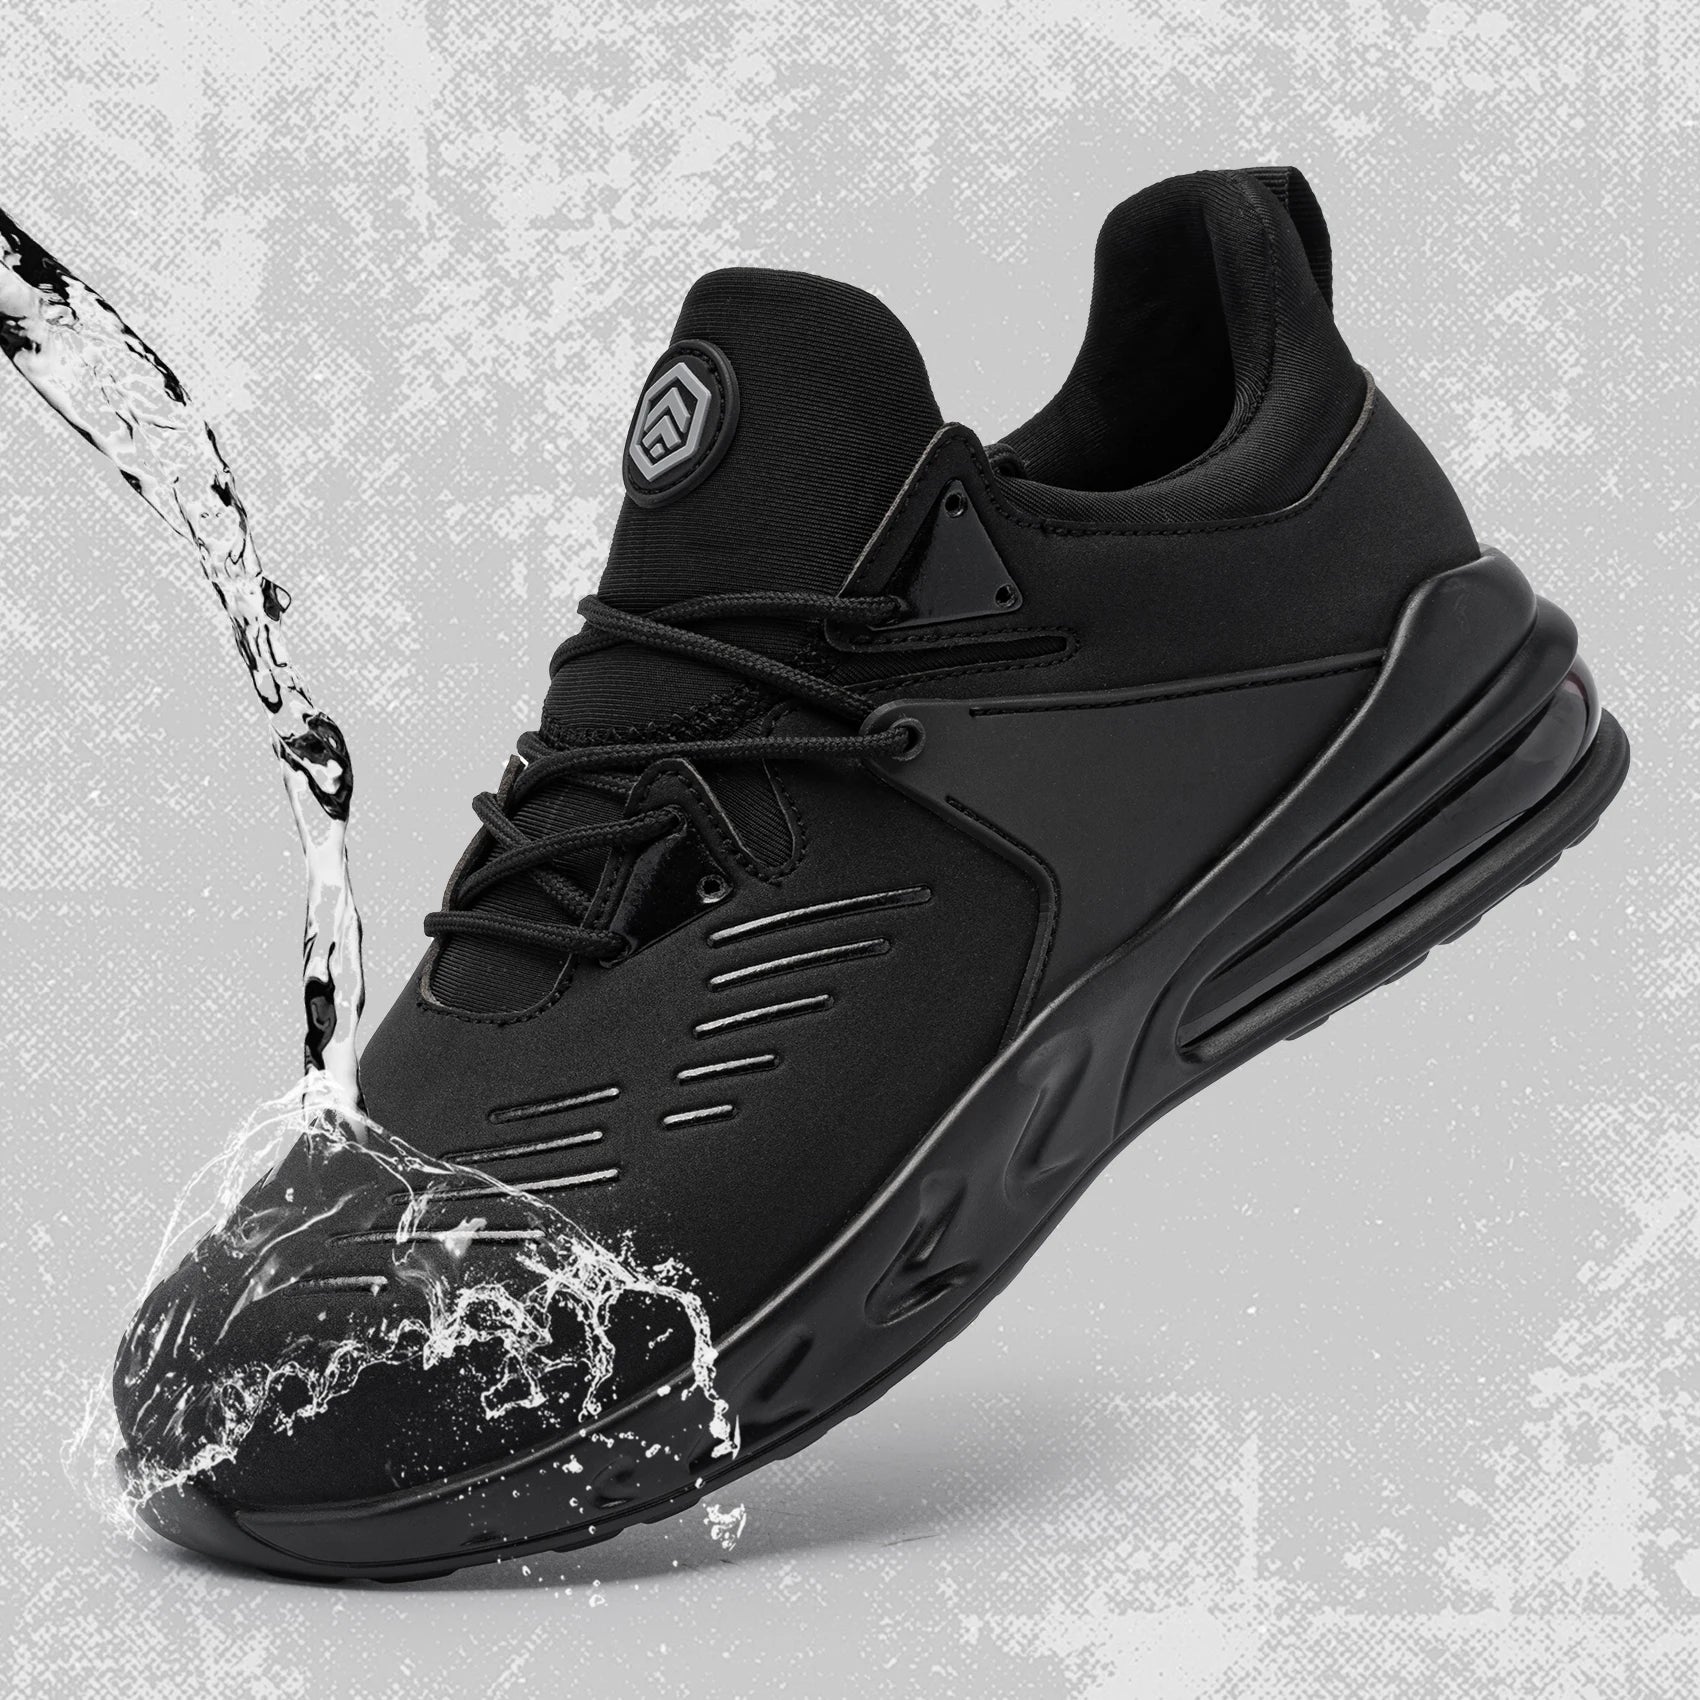 Steel Toe Work Shoes Waterproof  Shock proof Construction Sneaker